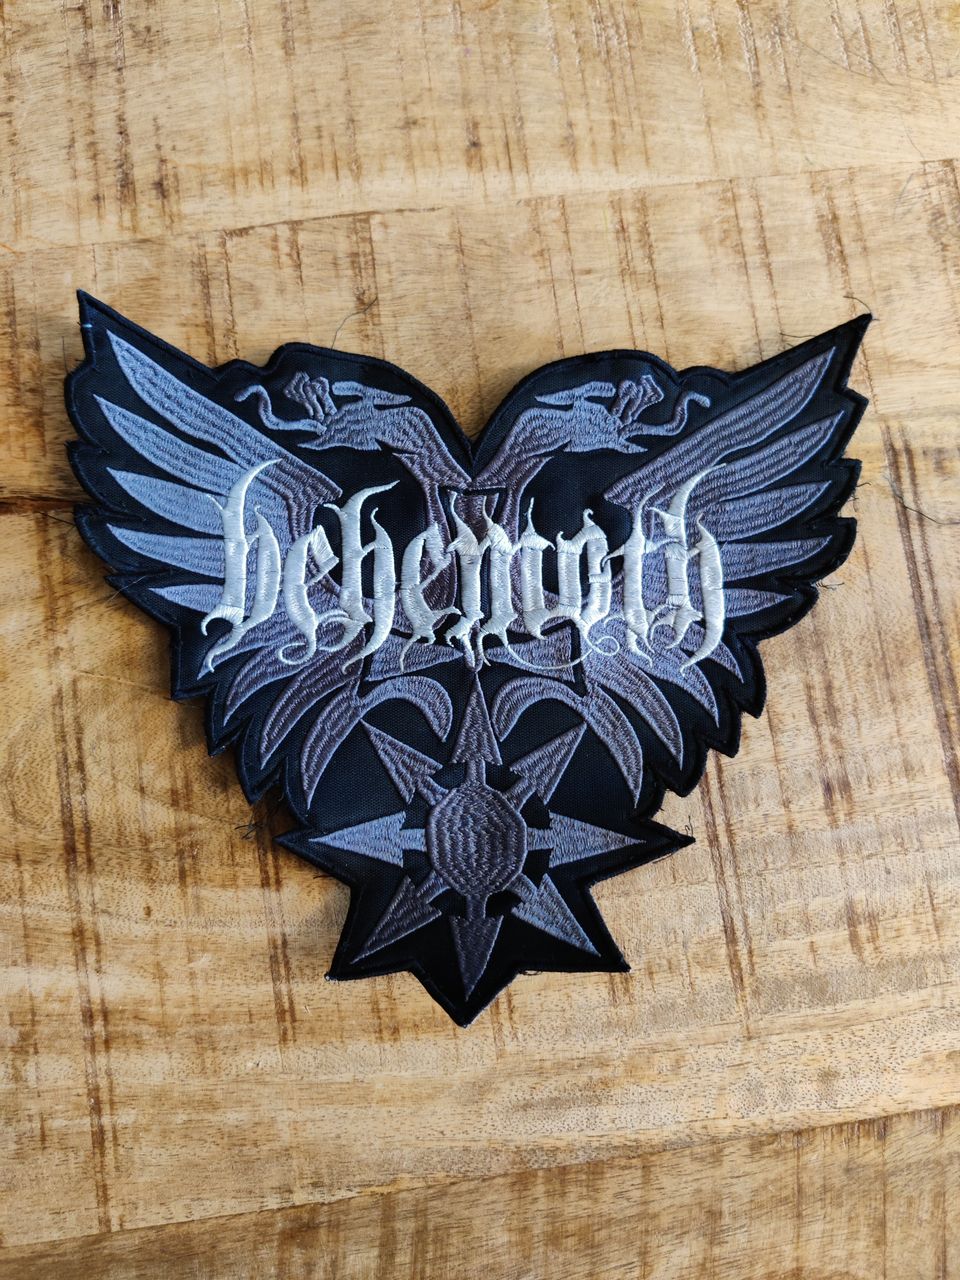 Black Death Metal patch selkämerkki